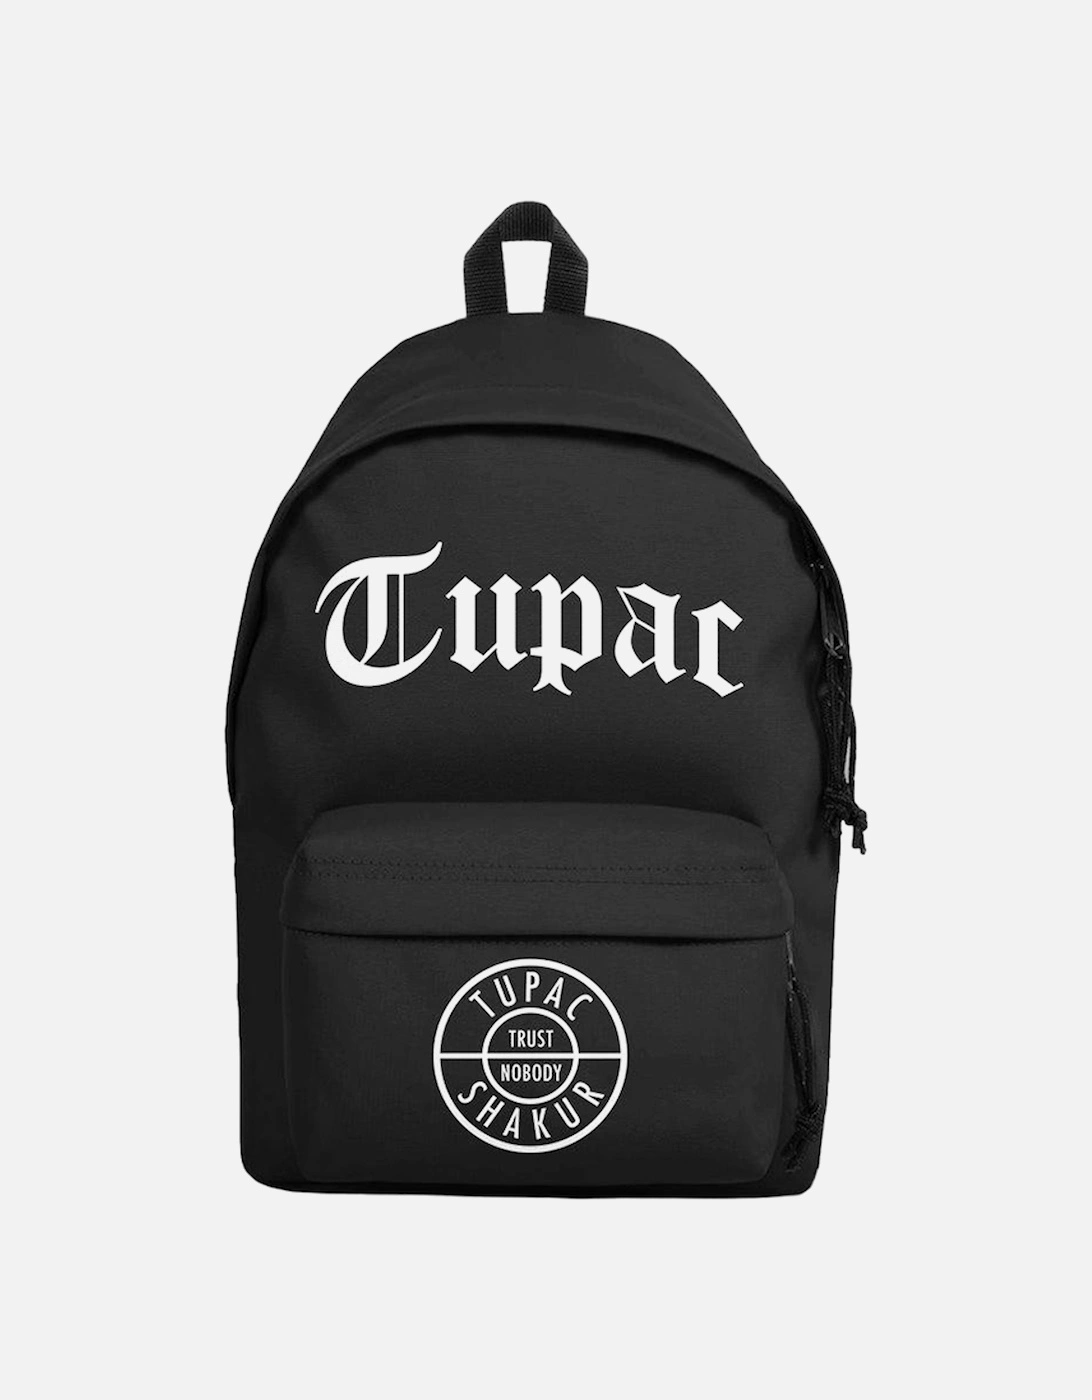 Trust Nobody Tupac Shakur Backpack, 2 of 1